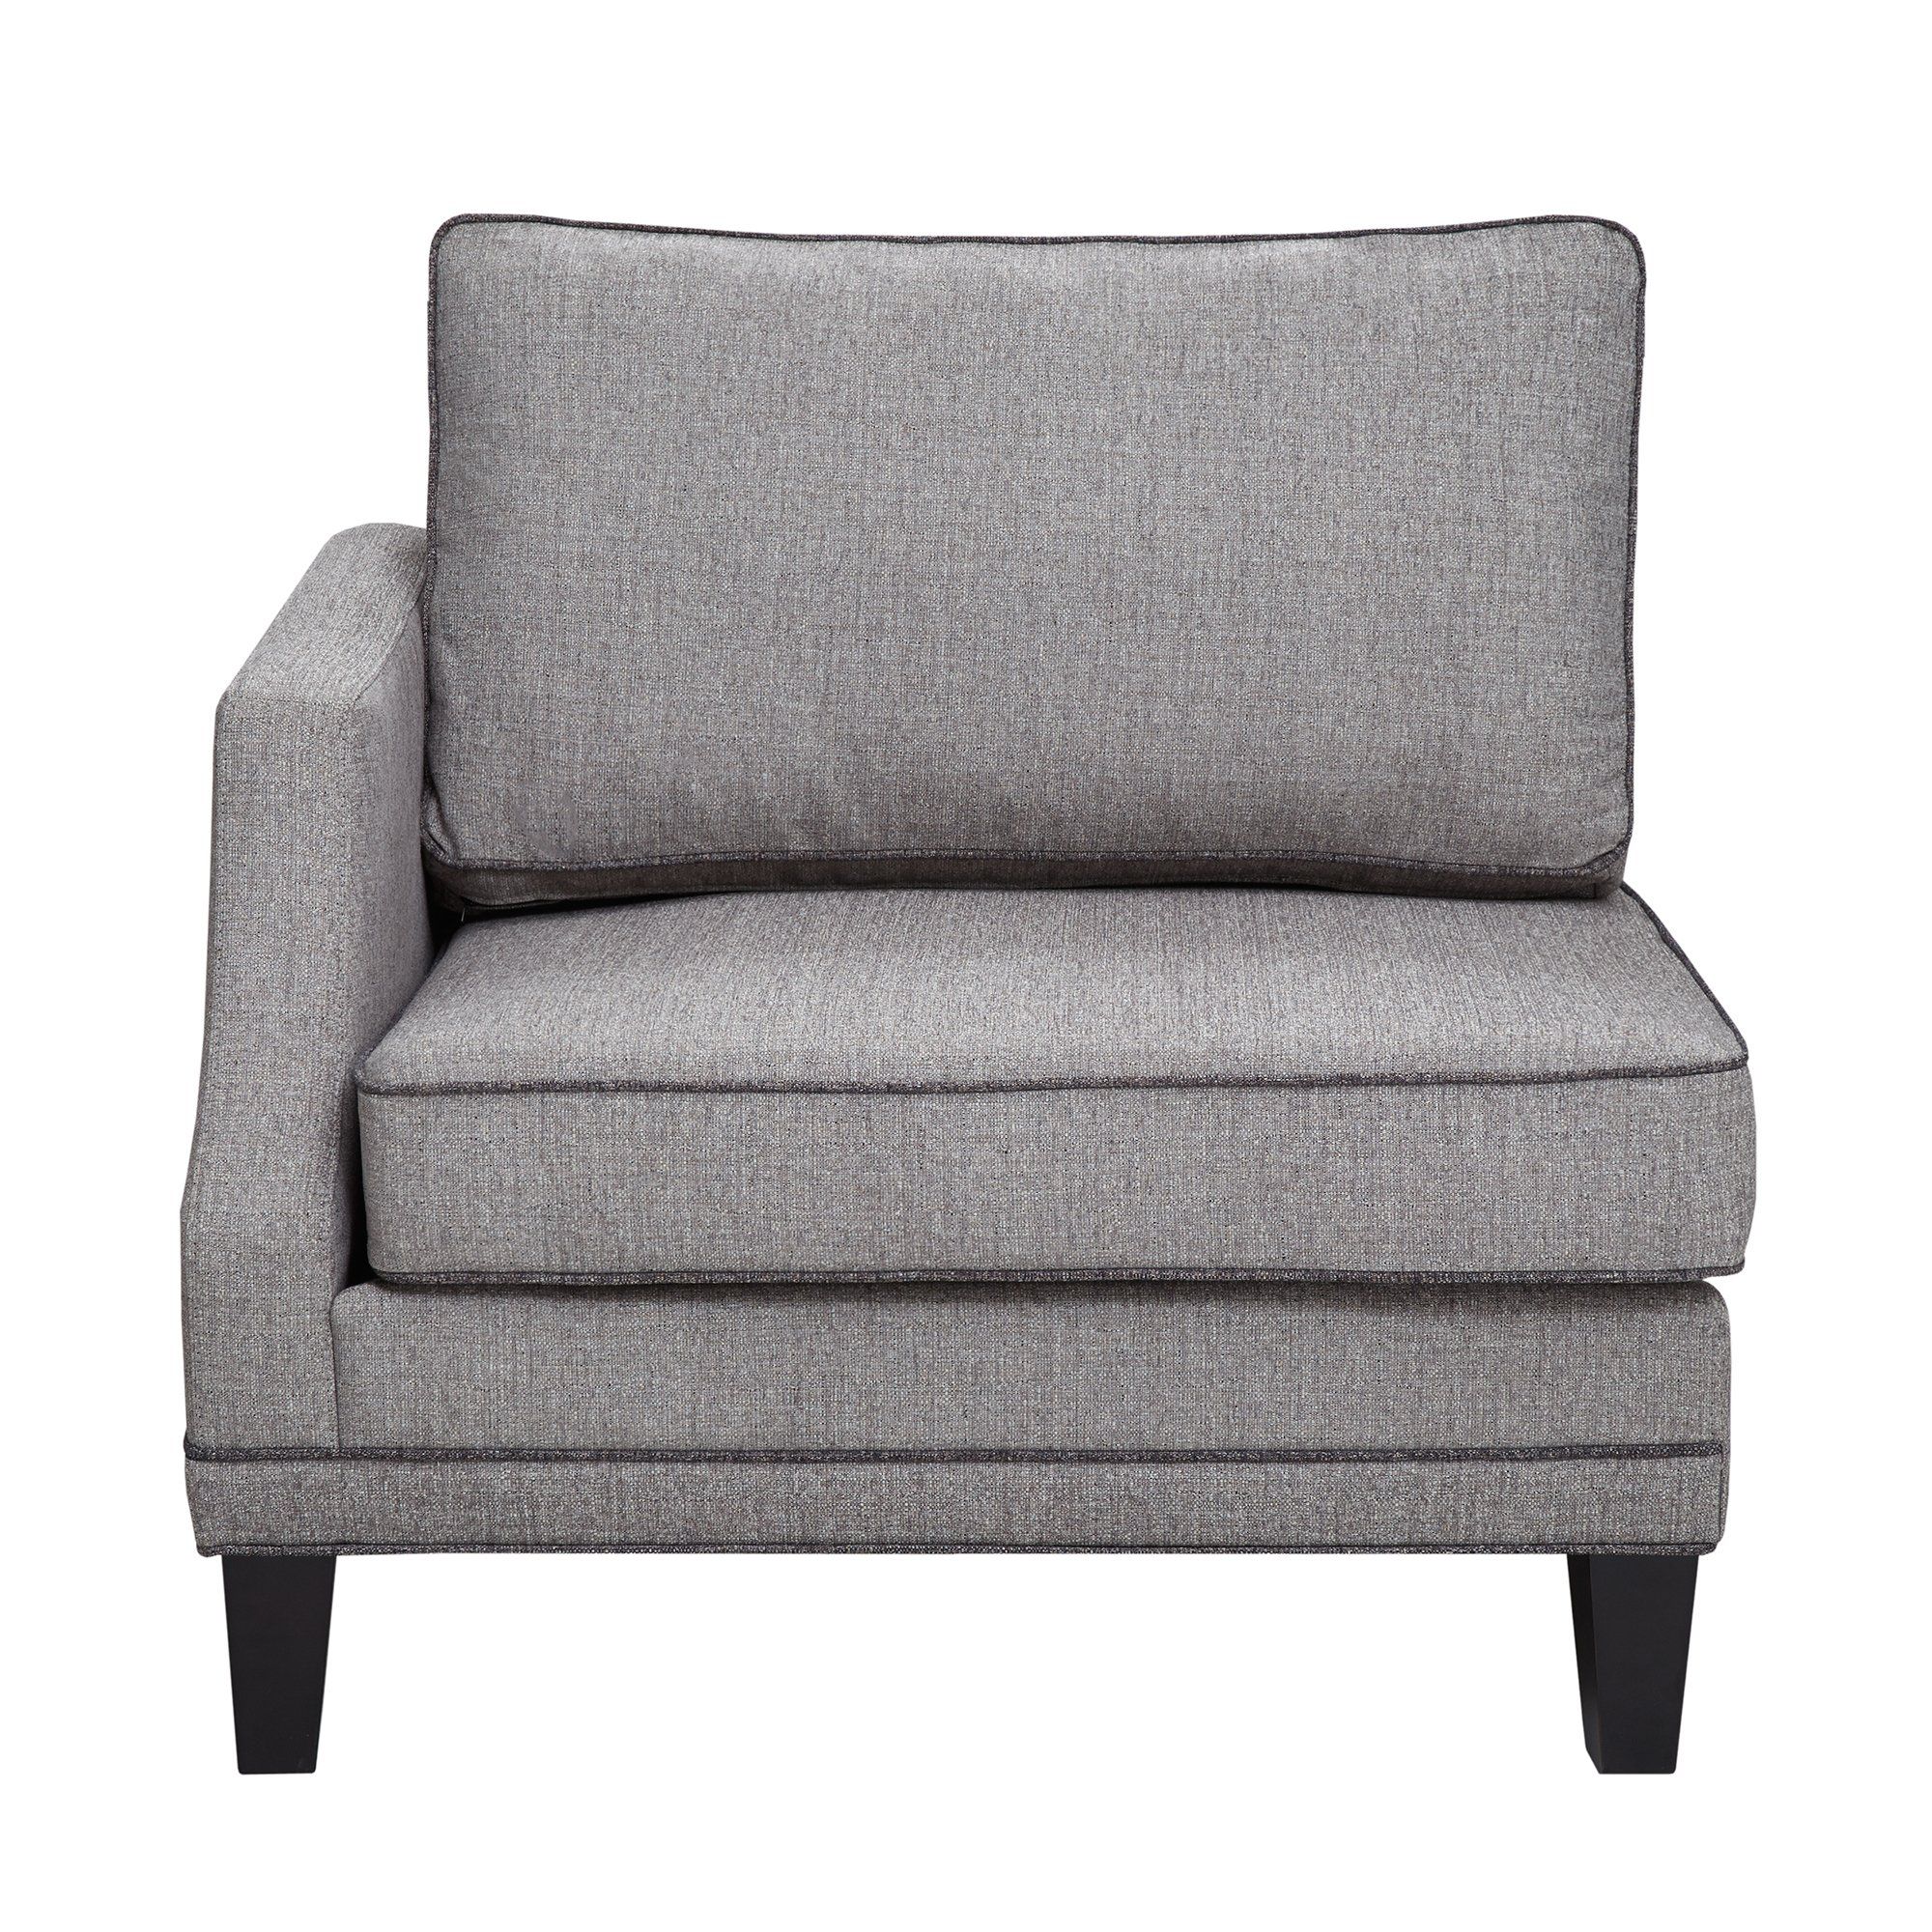 Shop Madison Park Signature Gordon Grey Modular Sectional Sofa Left Regarding Gordon Arm Sofa Chairs (View 8 of 20)